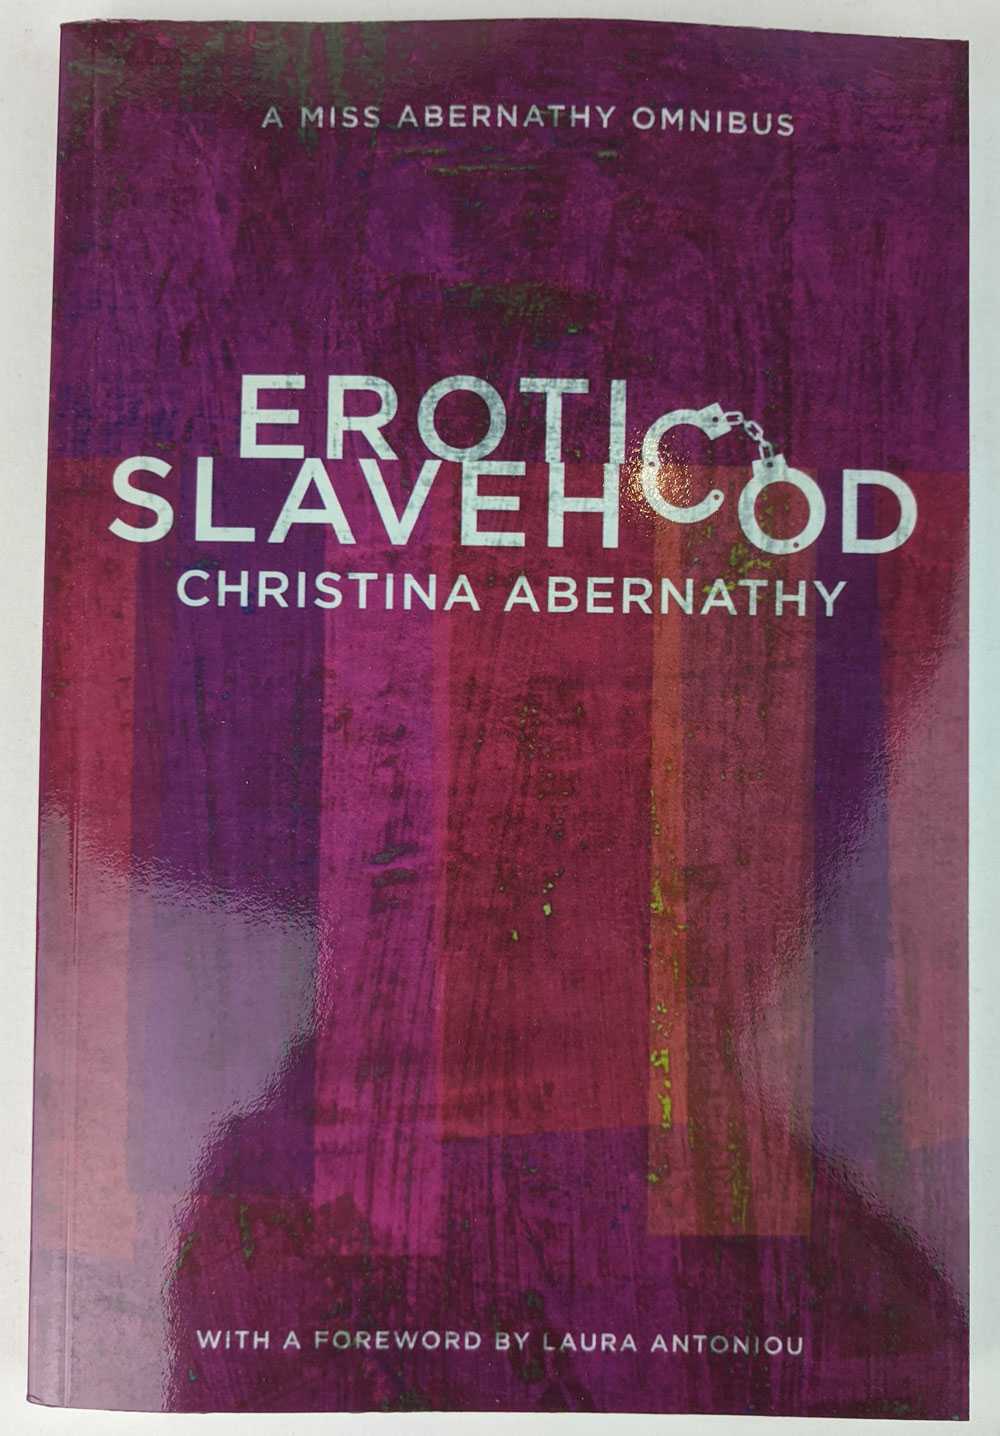 Christina Abernathy - Erotic Slavehood: The Miss Abernathy Omnibus